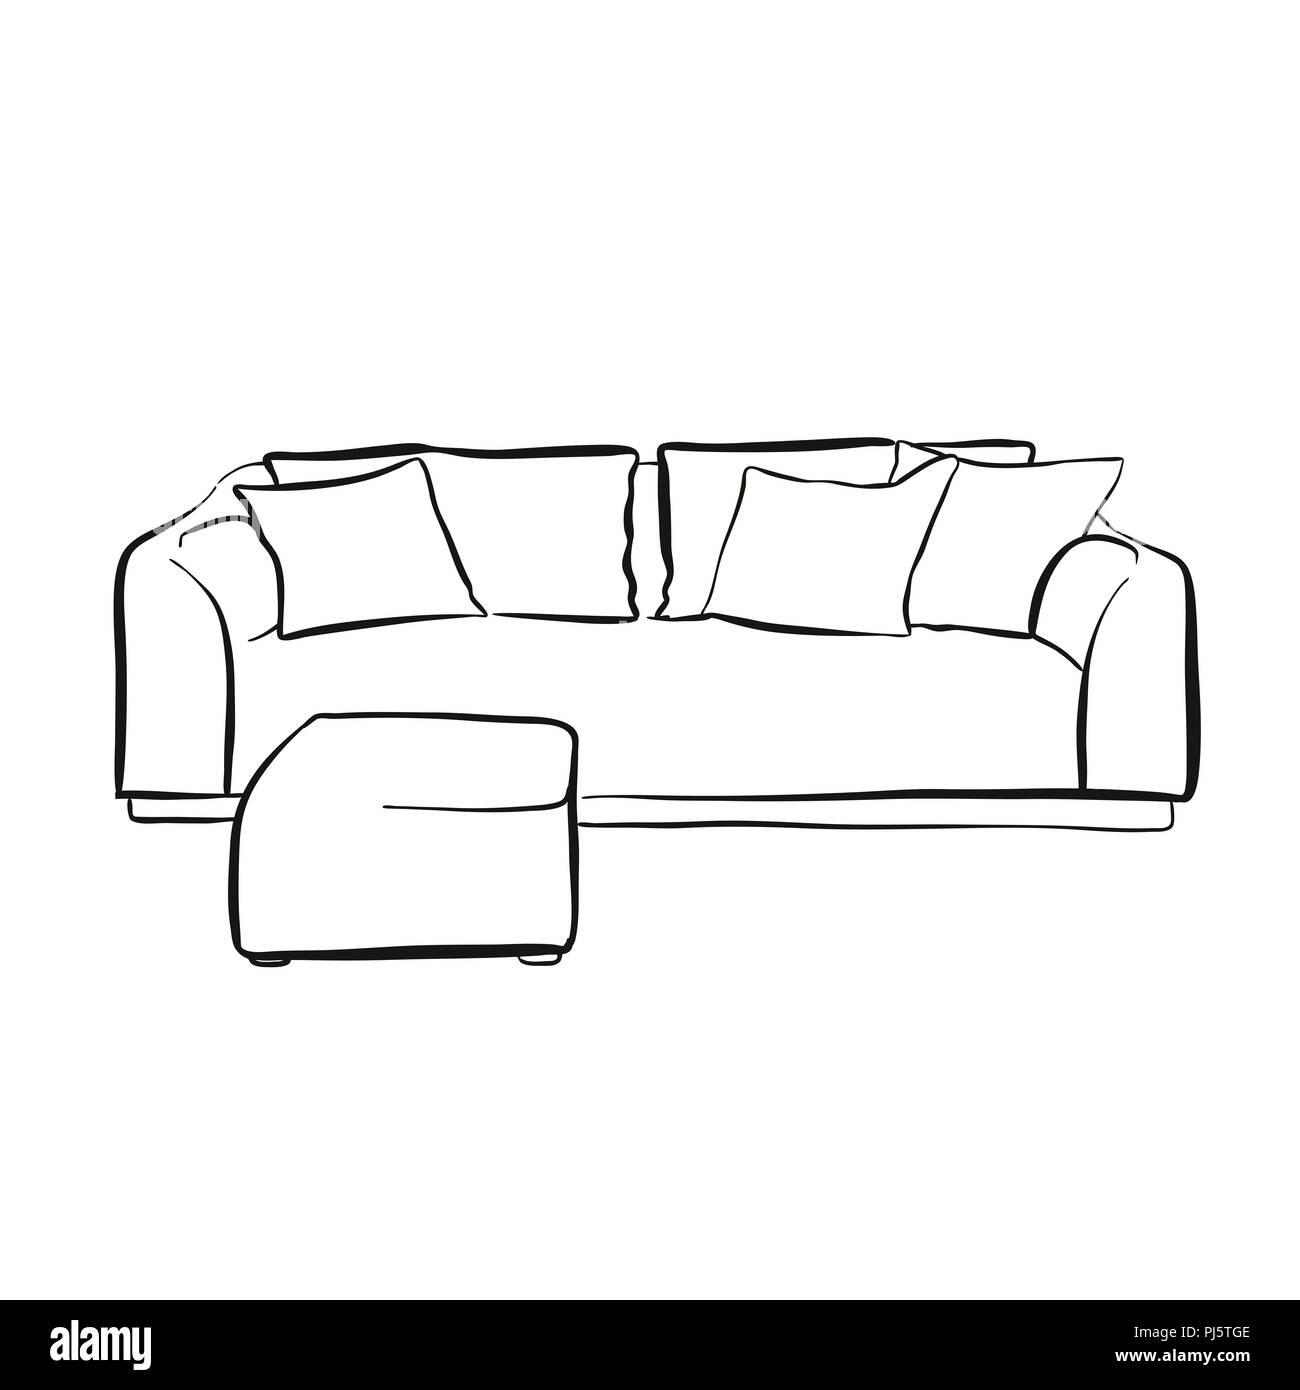 Sloopy Sofa By Sketch | Innerspace